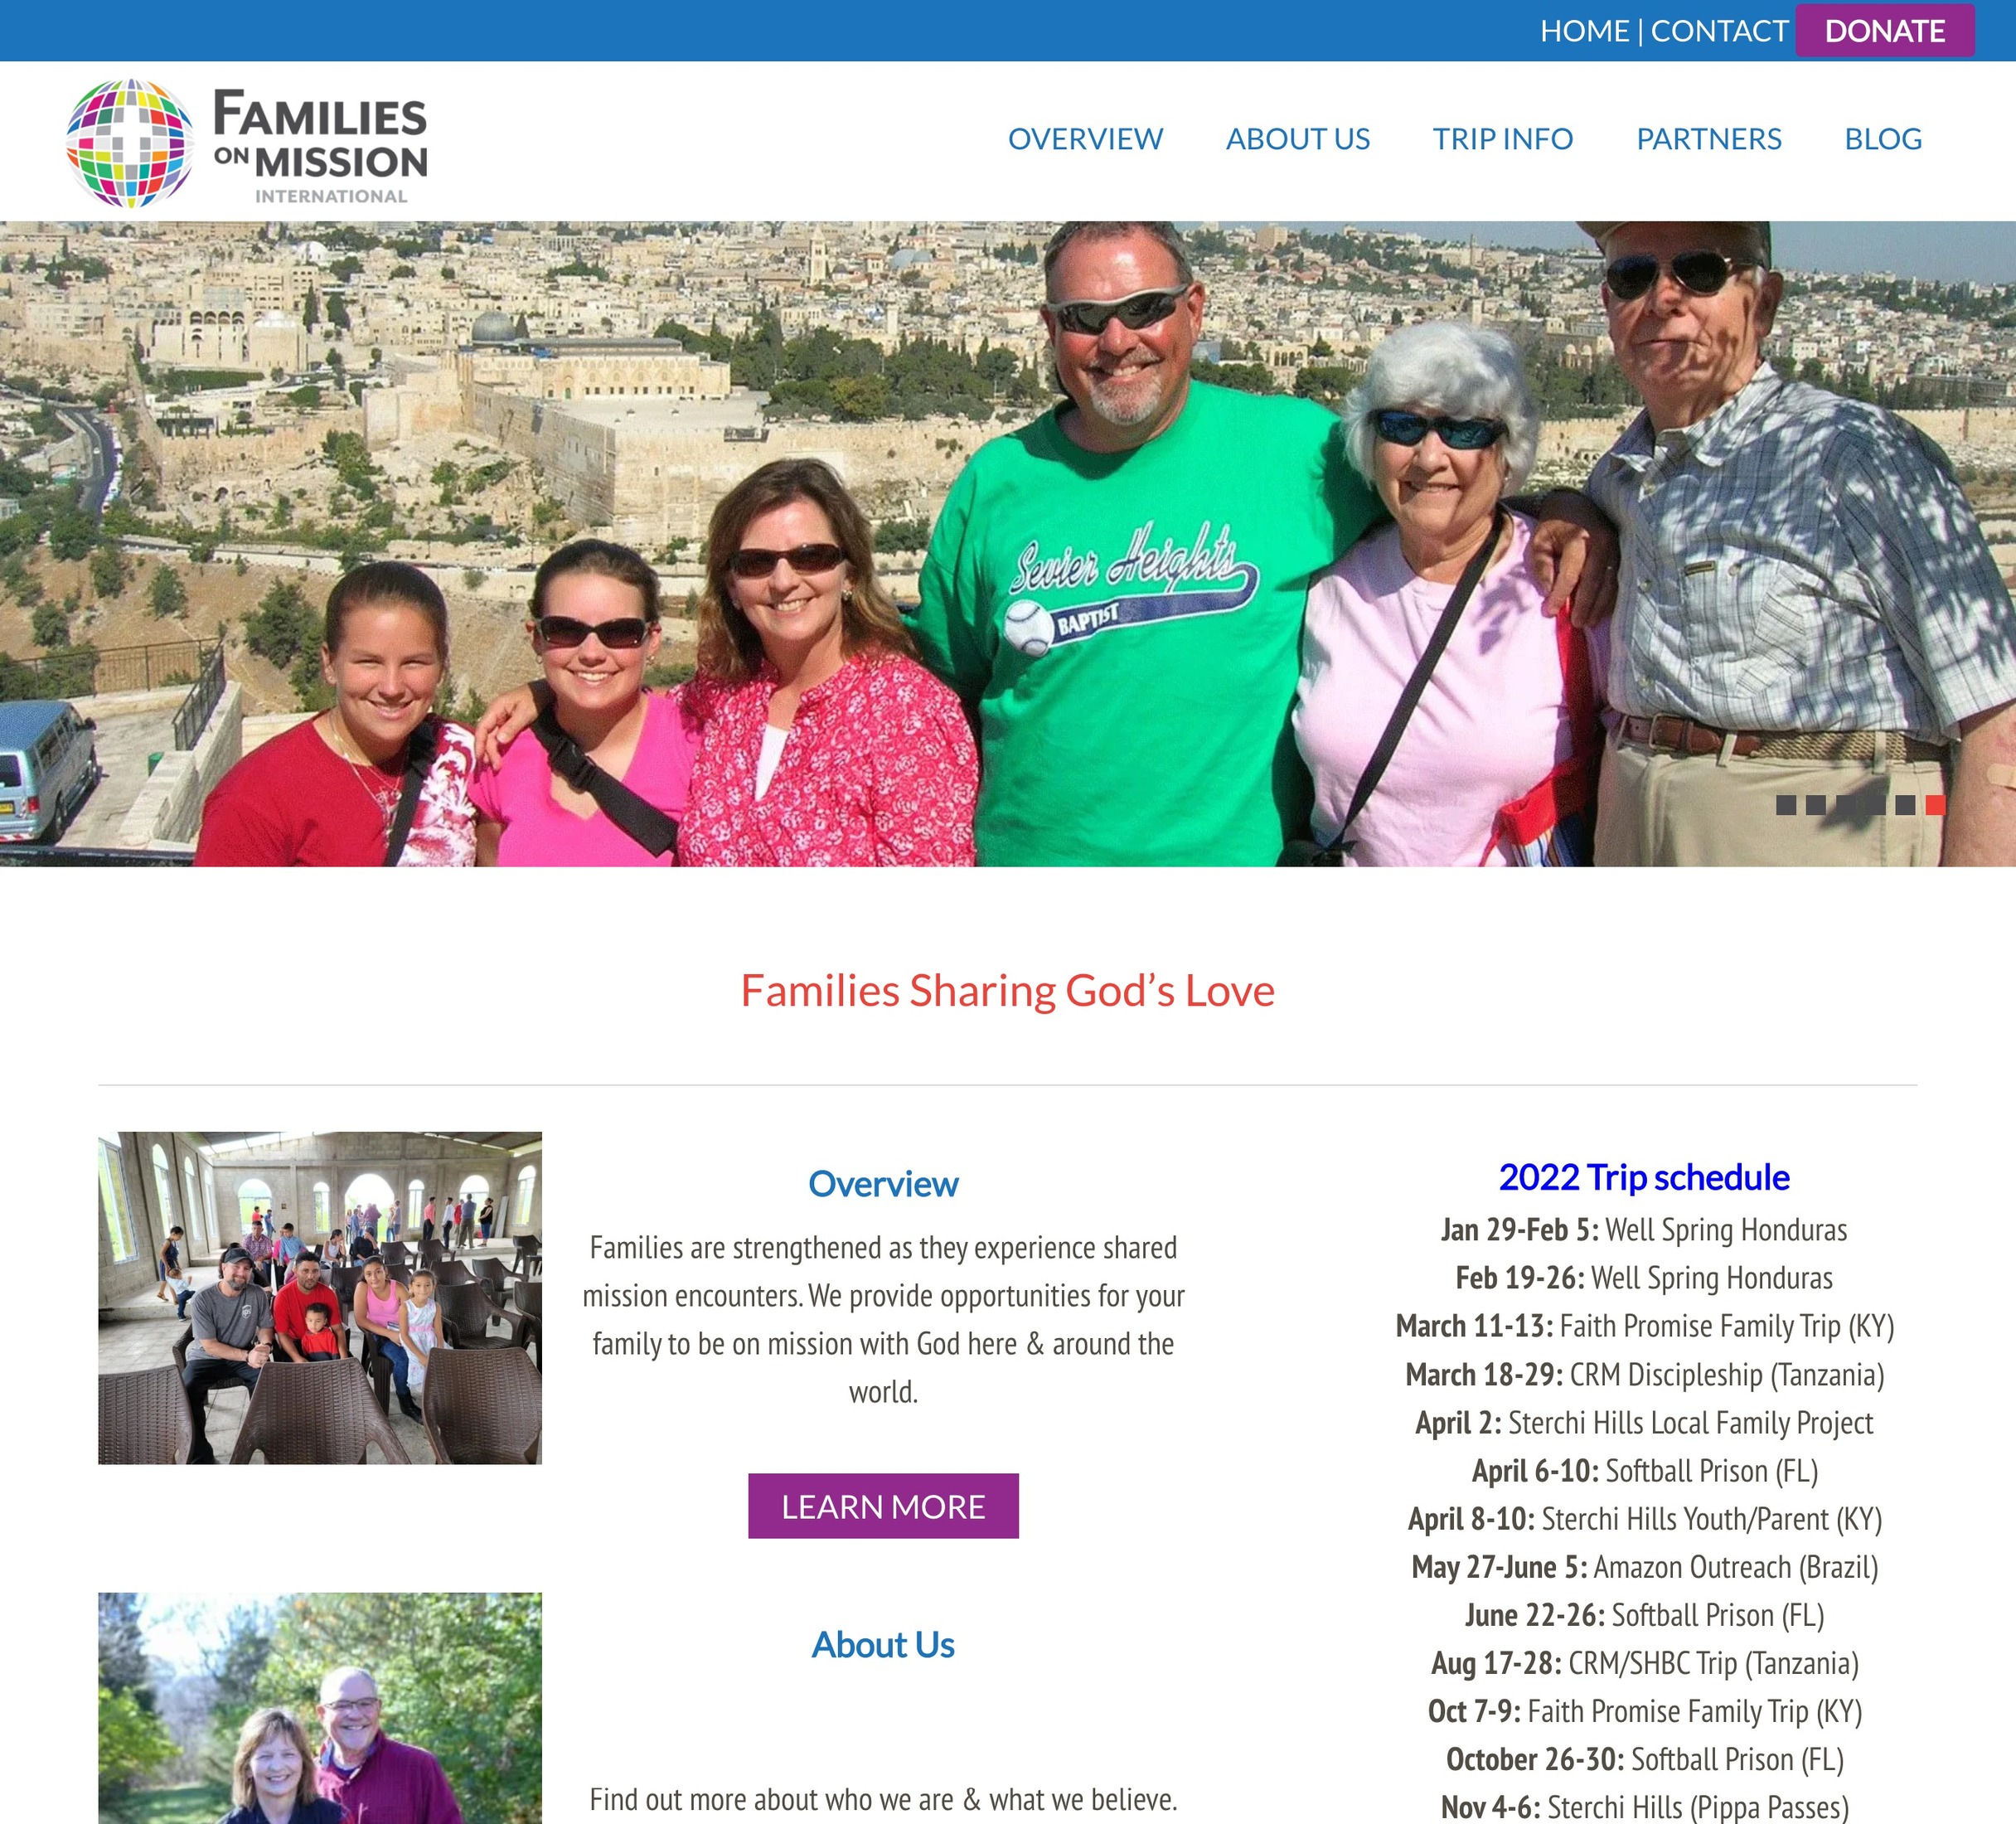 Families on Mission International